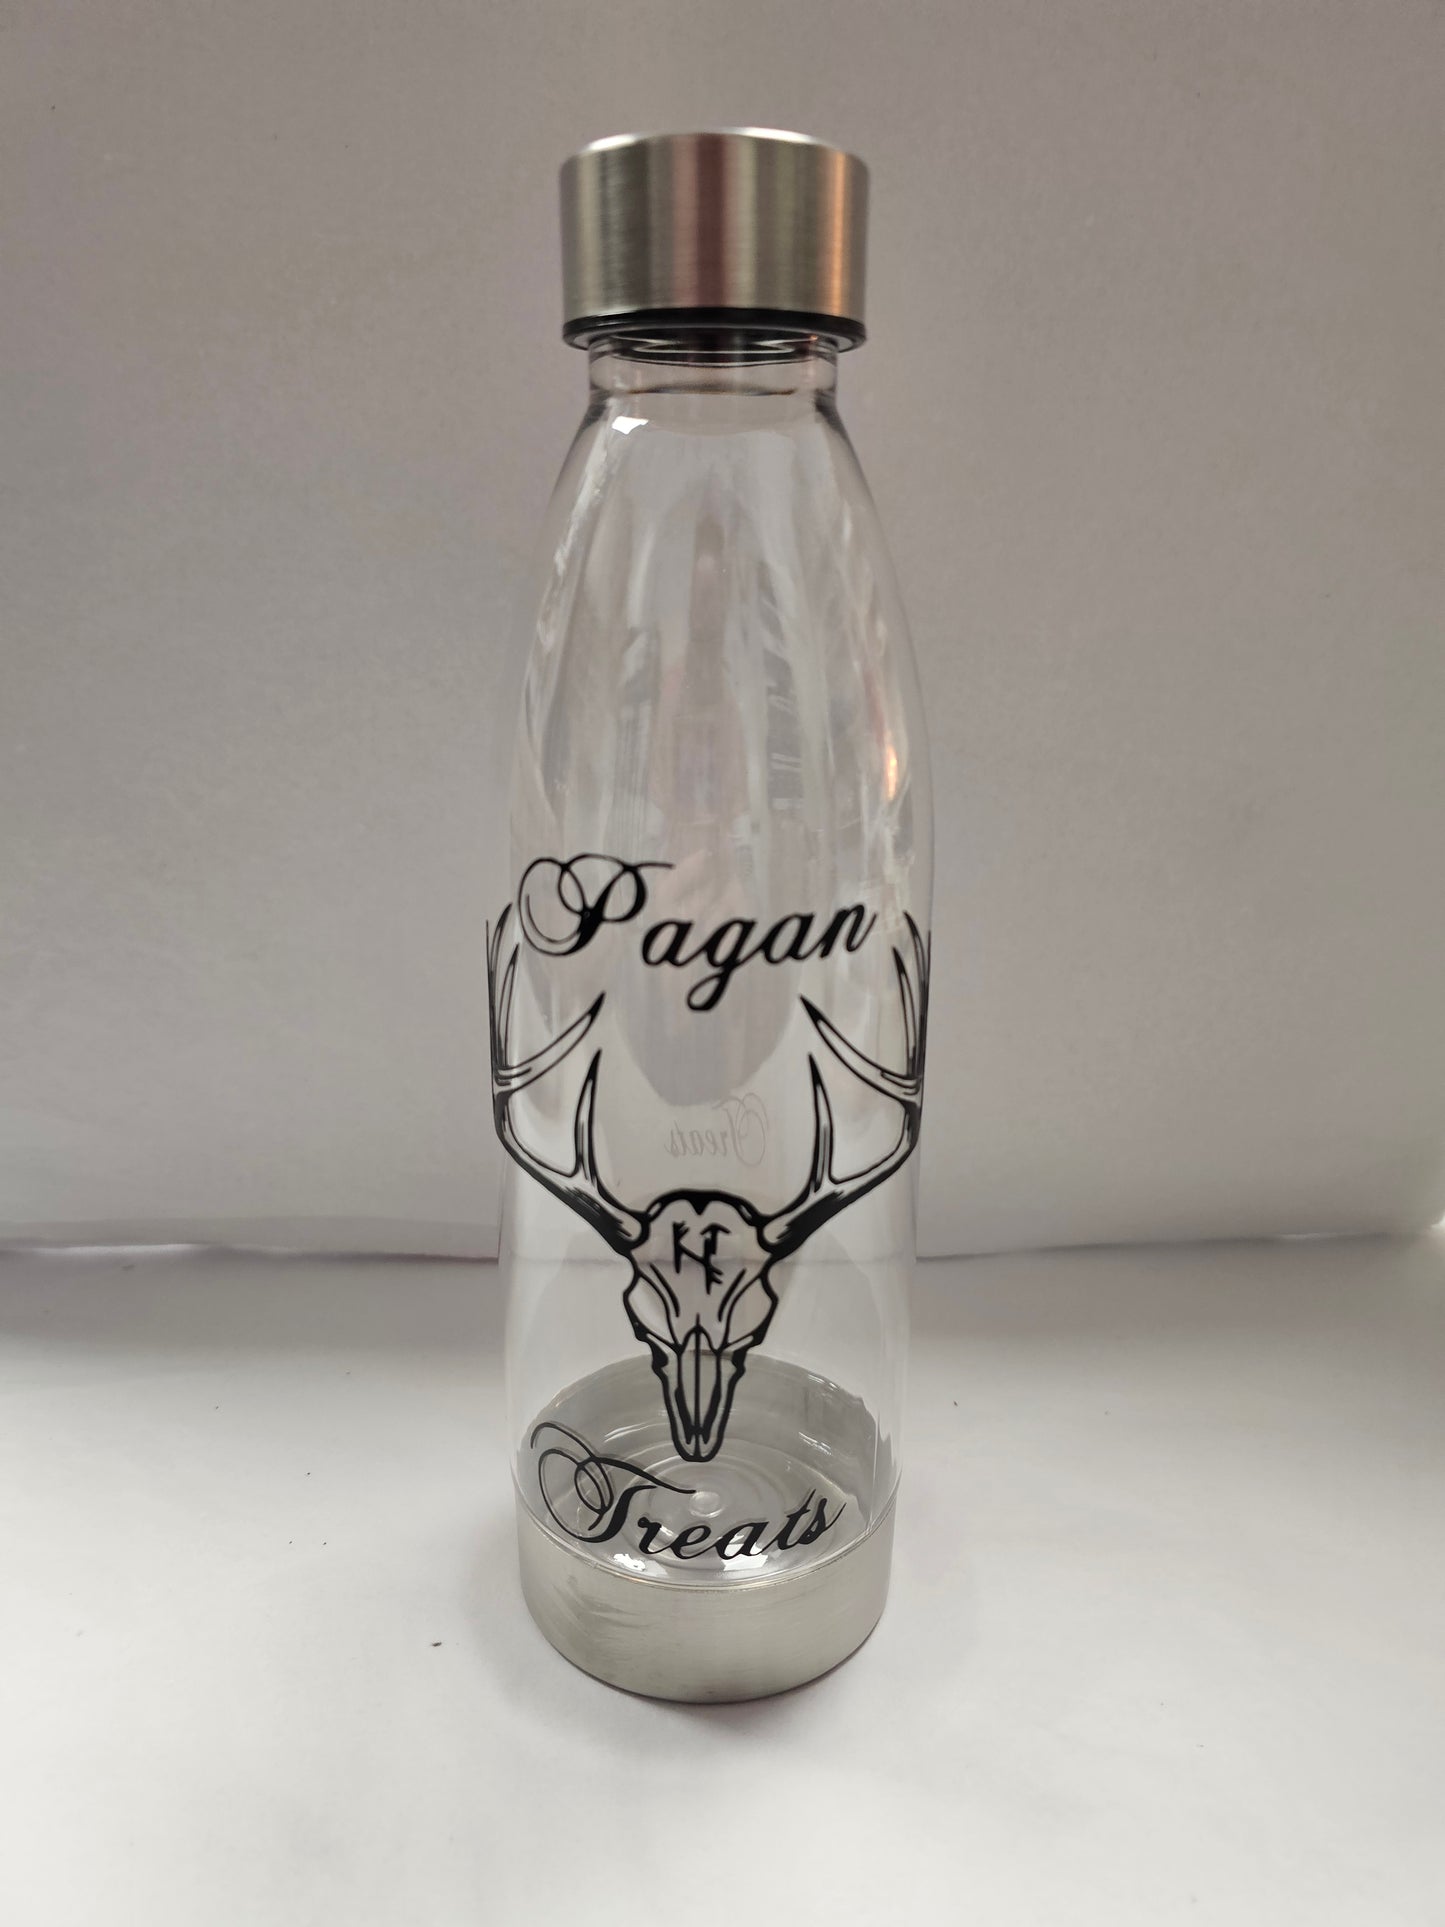 500ml Pagan Treats Bottle